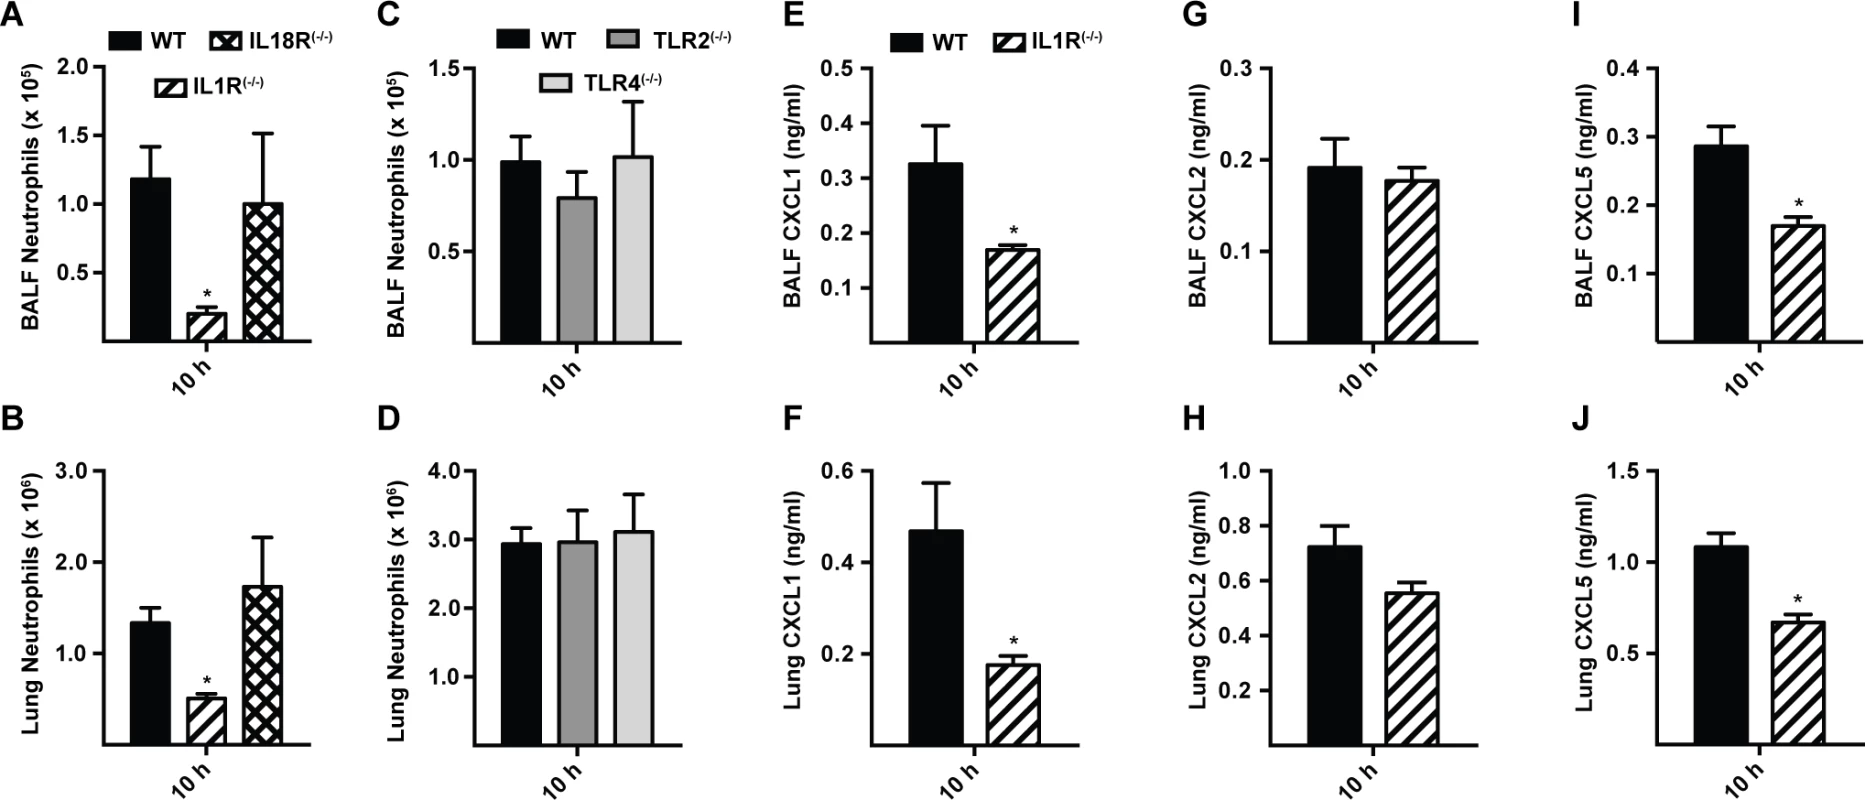 Interleukin-1 receptor signaling controls MyD88-dependent chemokine induction and neutrophil recruitment.